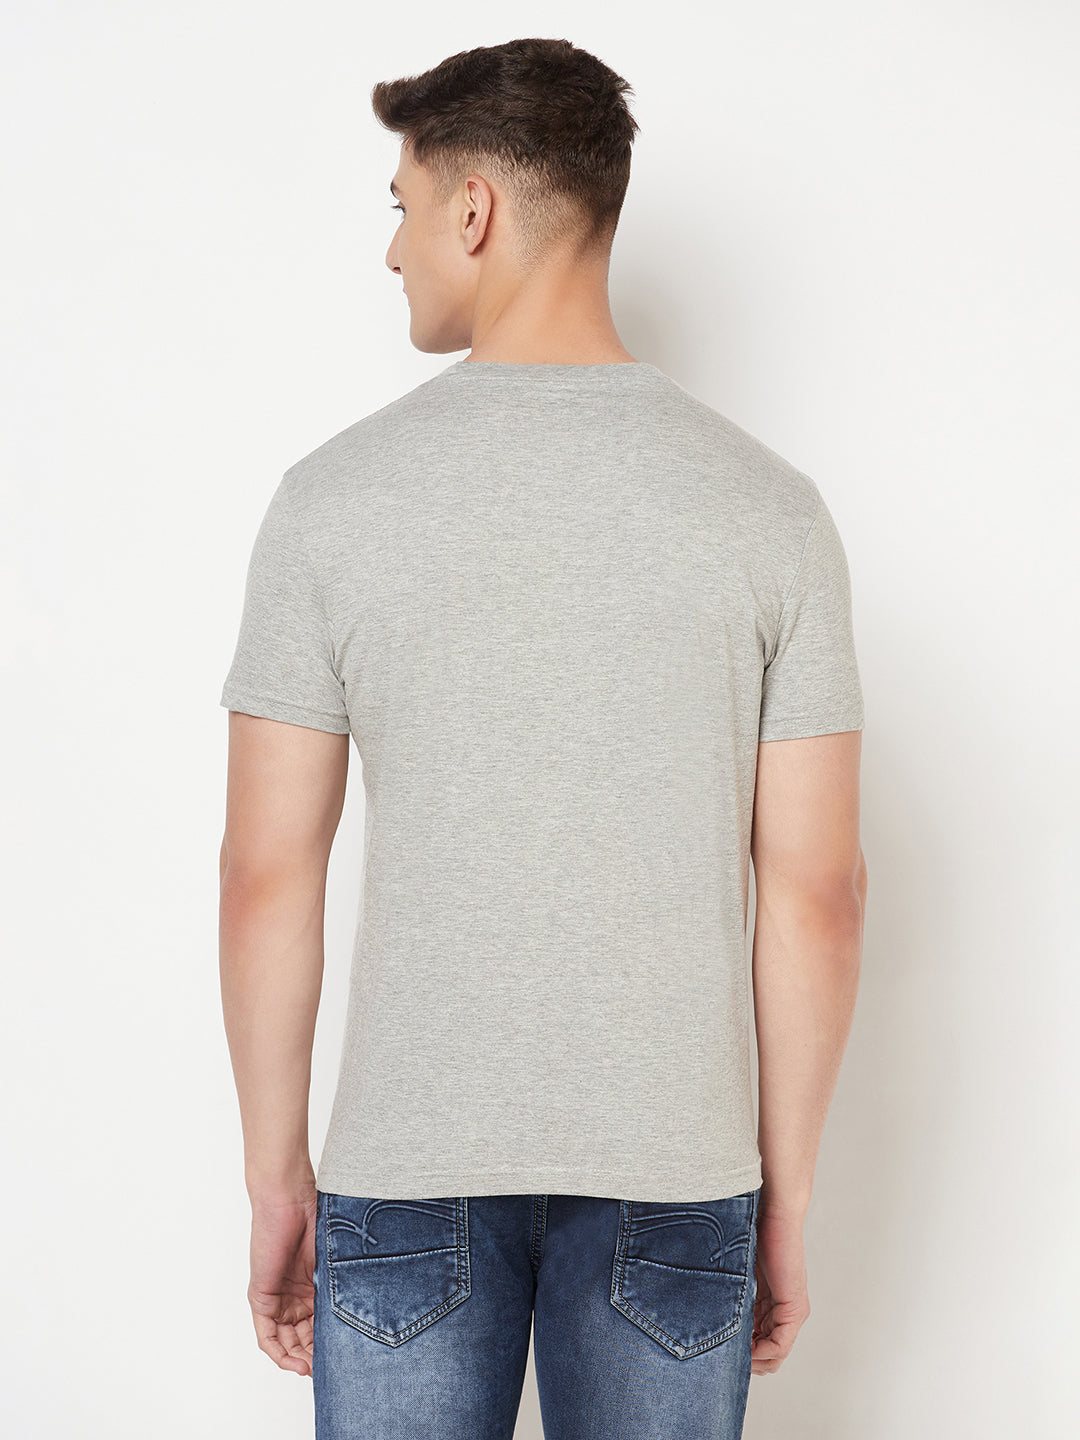 Men's Premium Cotton Tshirts  (Pack of 2- Grey,Green) - NITLON * TRUEREVO